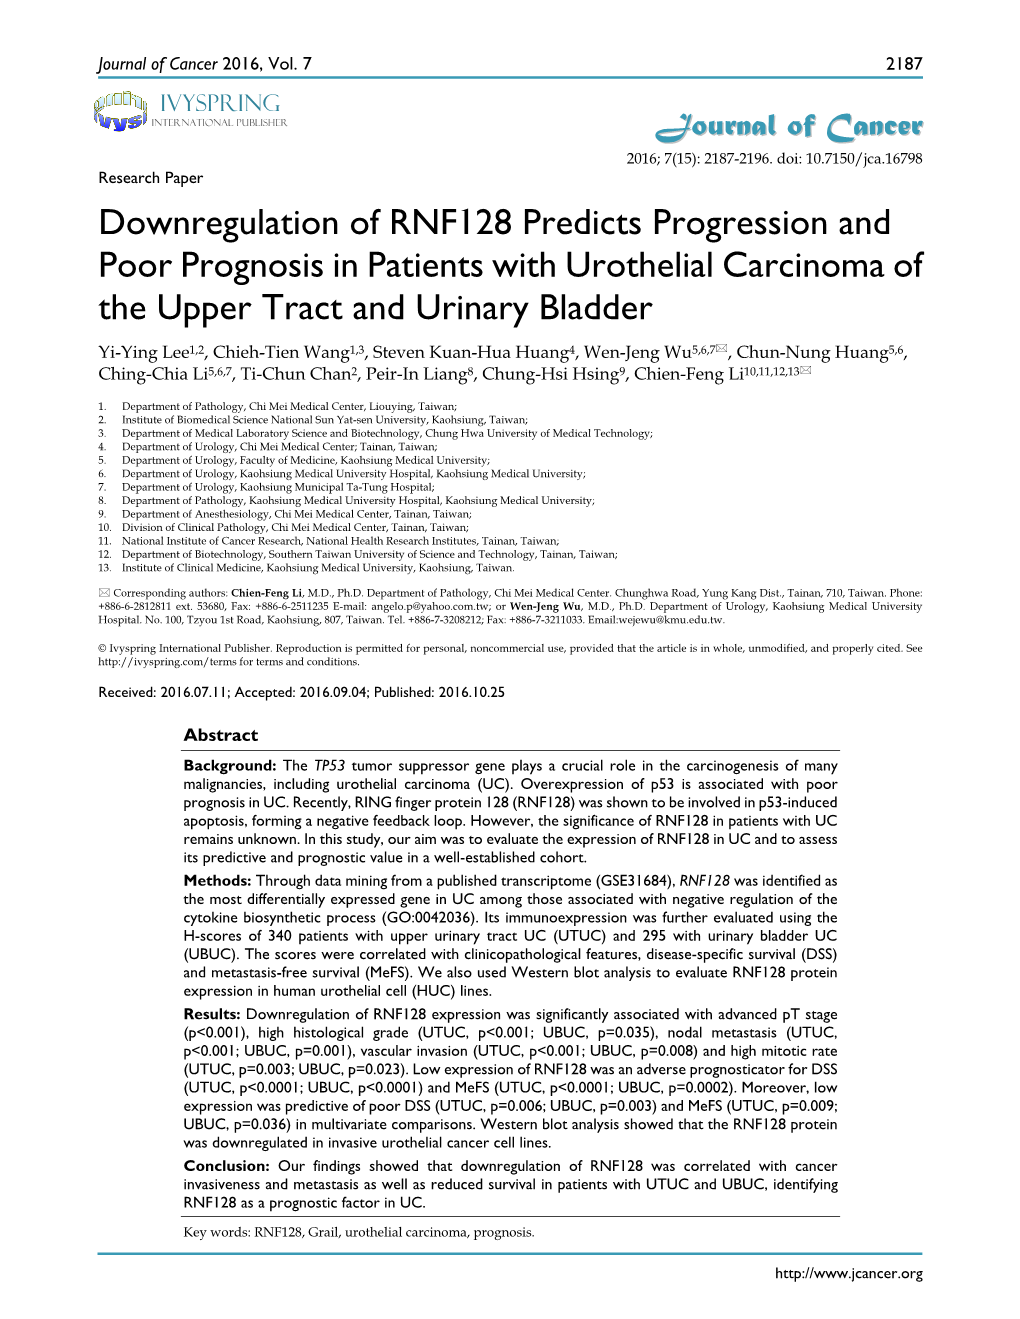 Downregulation of RNF128 Predicts Progression and Poor Prognosis In